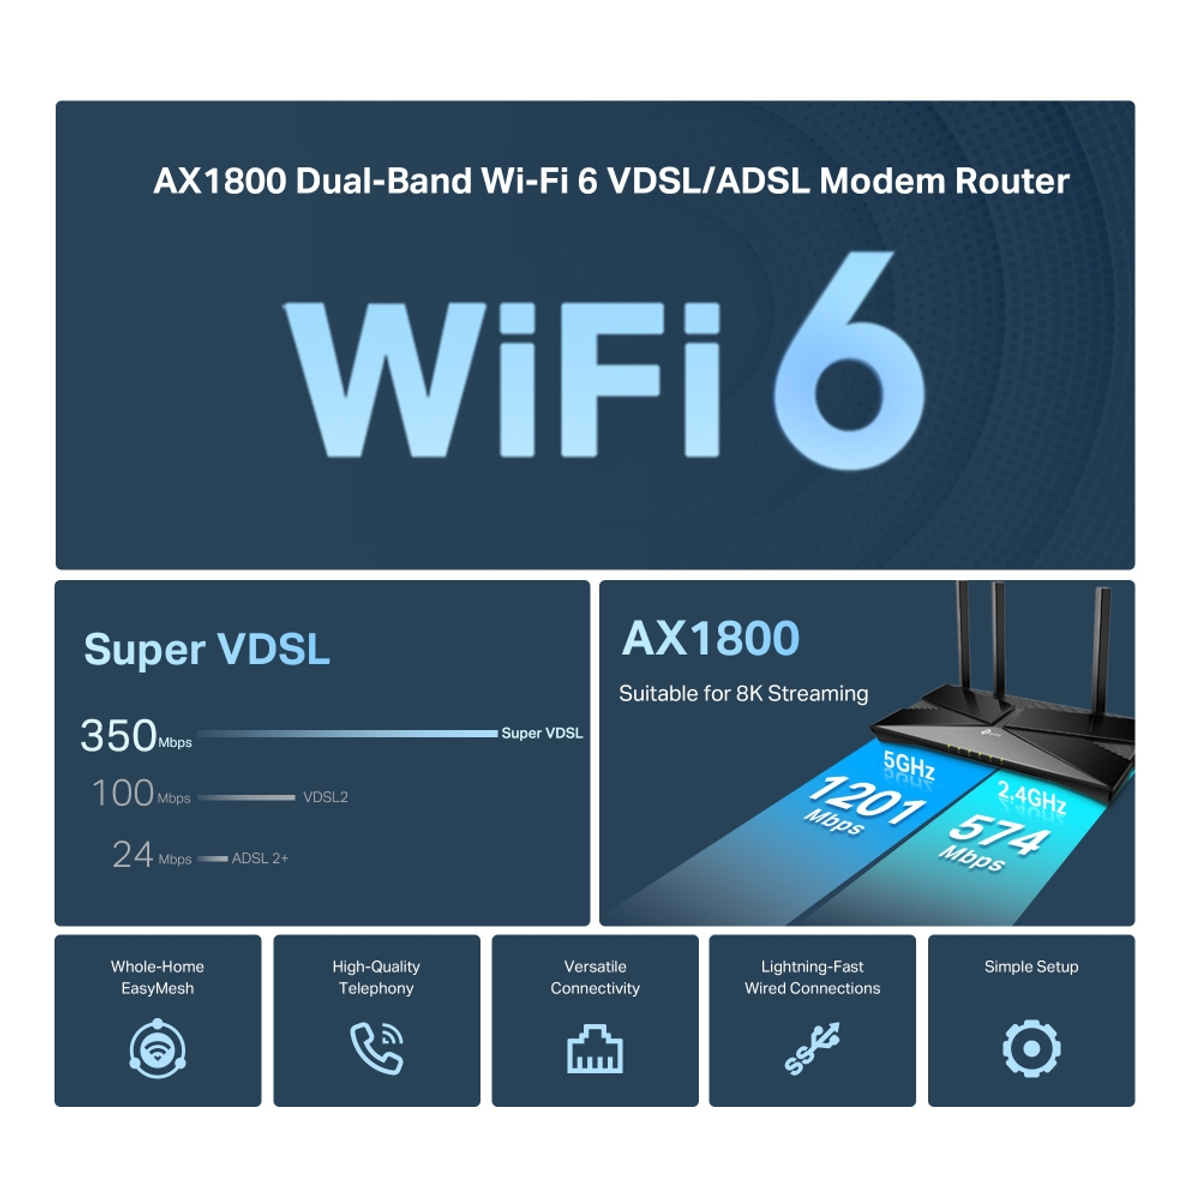 DualBand Wi-Fi 6 VDSL/ADSL Modem Router